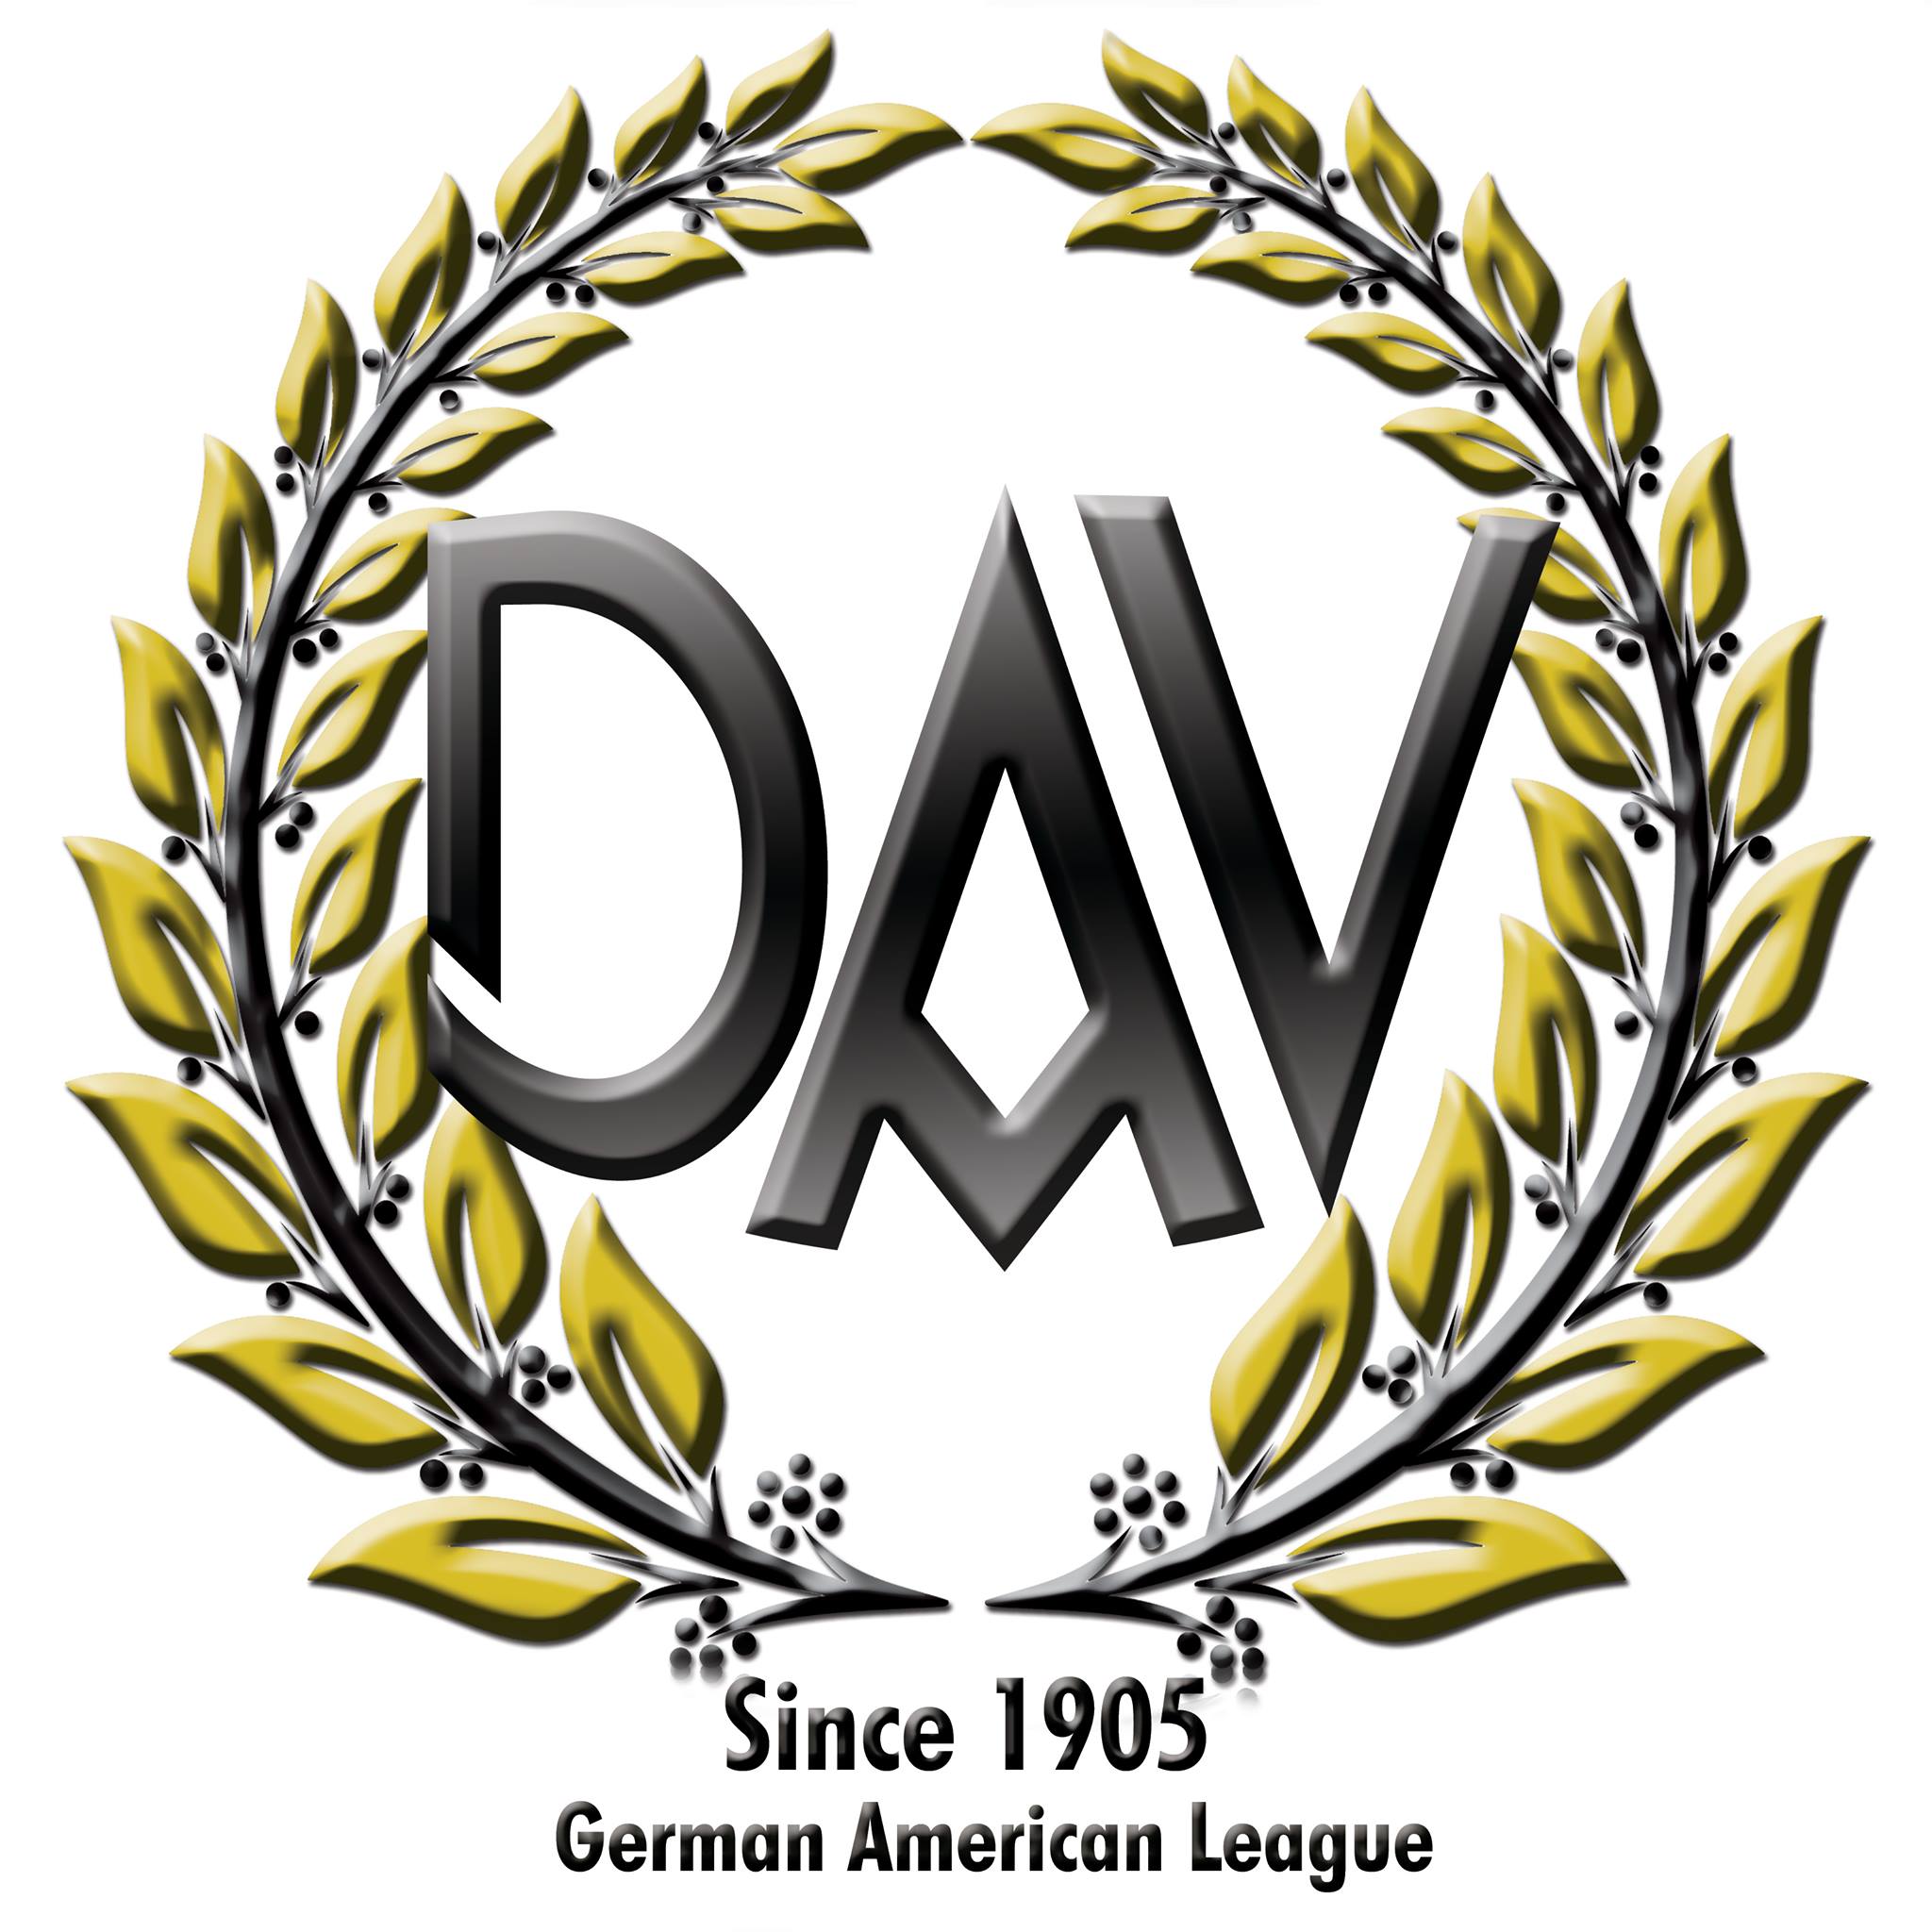 German Organizations in California - German-American League of Los Angeles, Inc., Ltd.